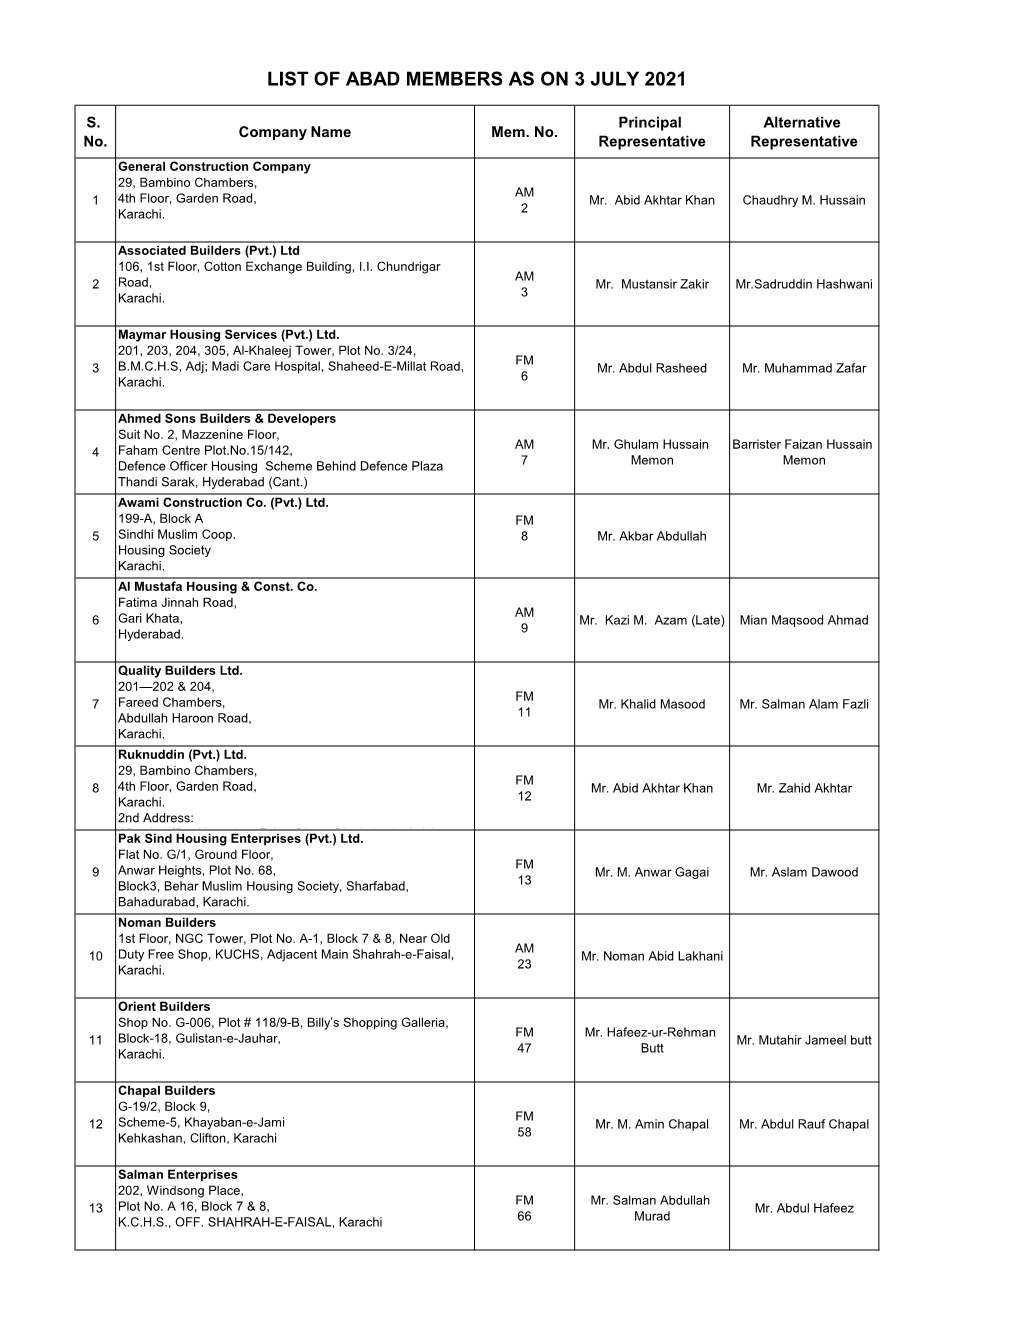 List of Abad Members As on 3 July 2021